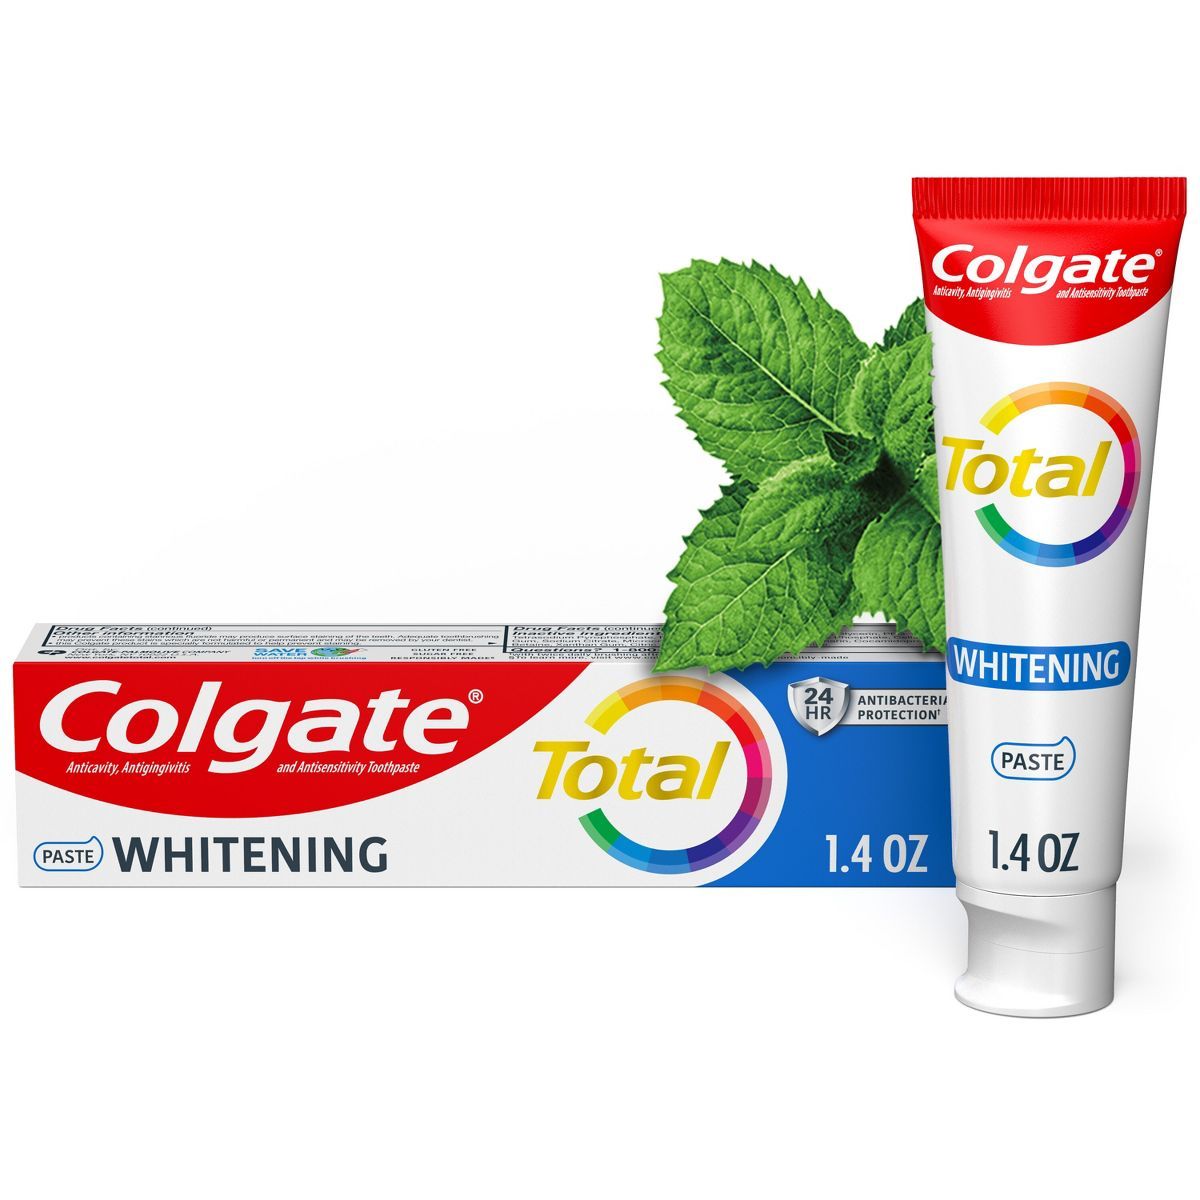 Colgate Total Travel Size Whitening Paste Toothpaste - Trial Size - 1.4oz | Target